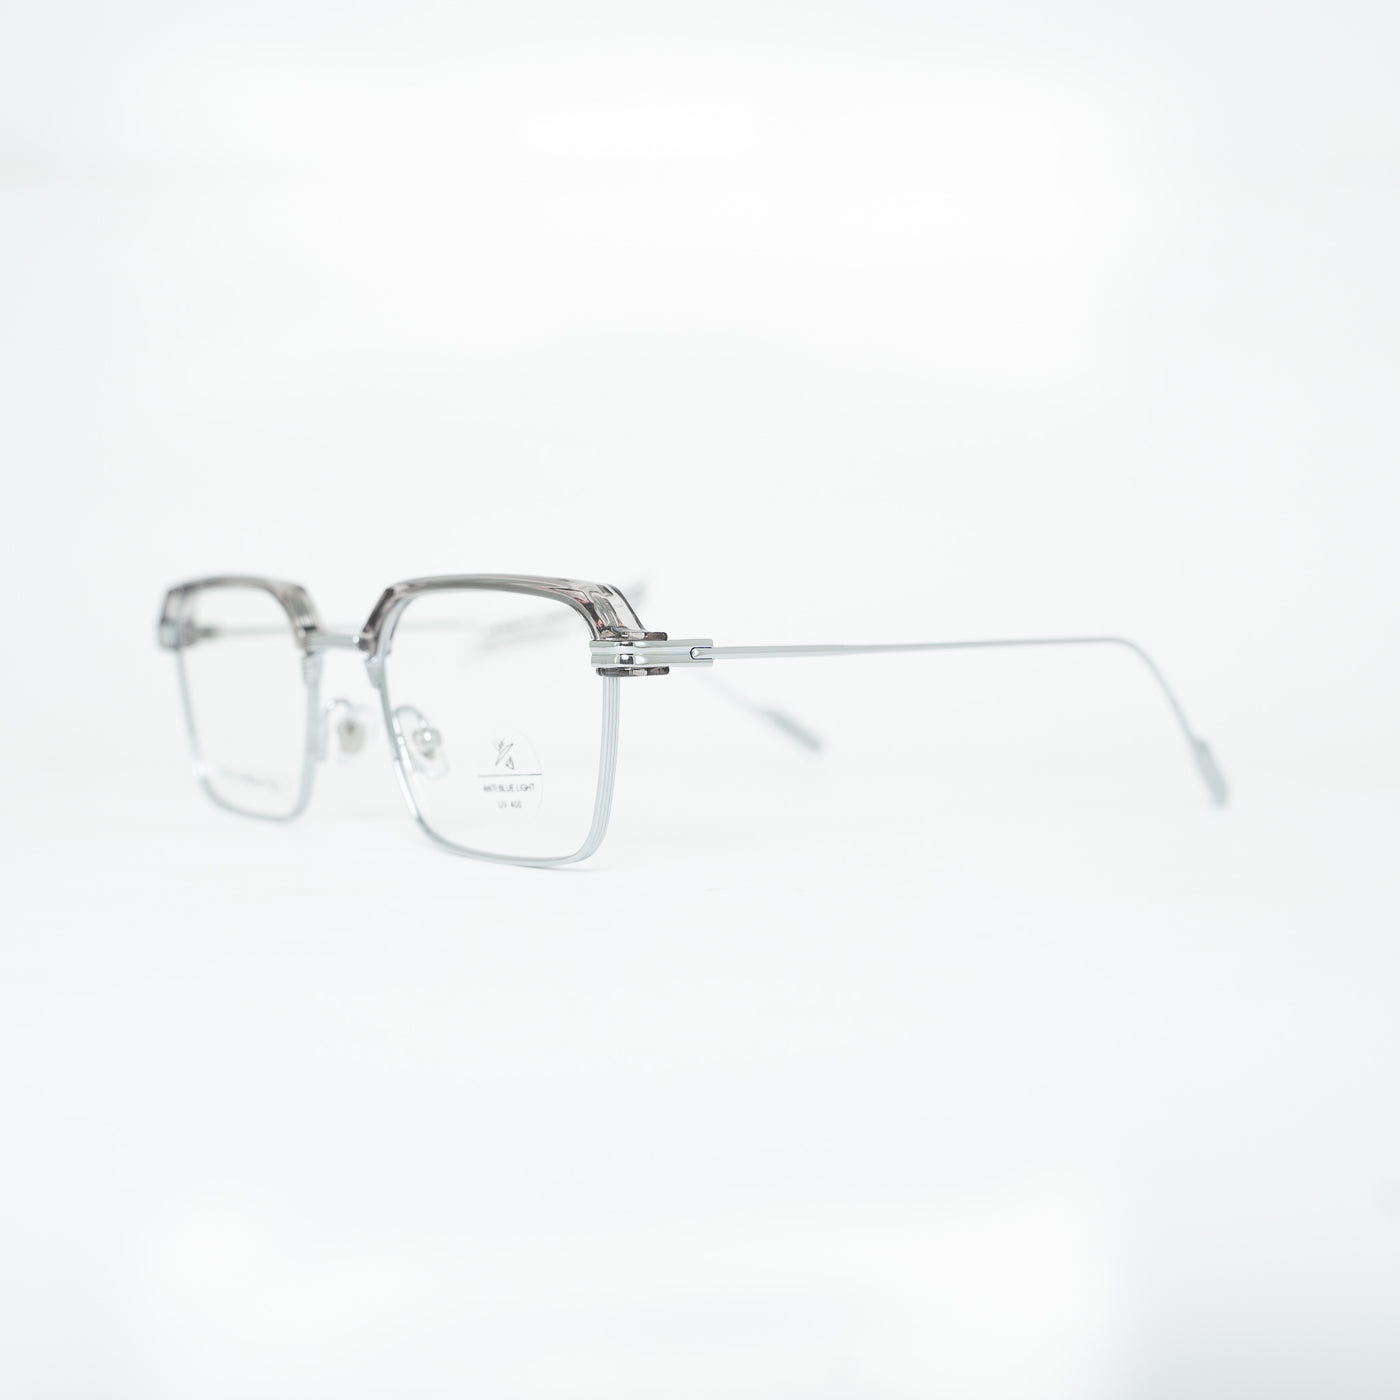 Tony Morgan TMZS52062GREY53 | Eyeglasses - Vision Express Optical Philippines